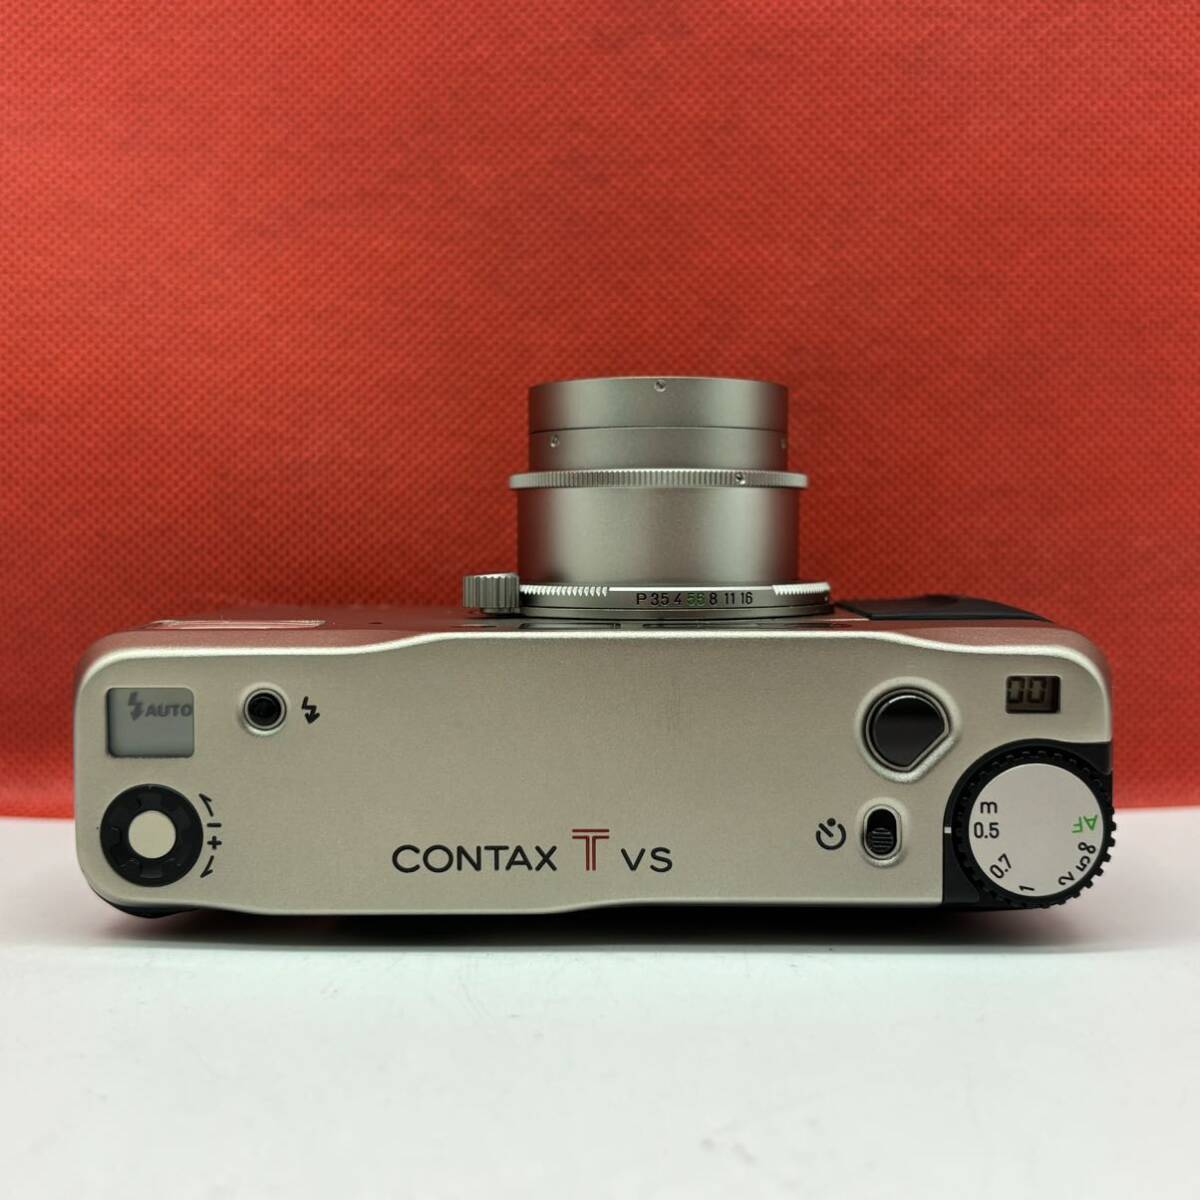 * CONTAX TVS compact film camera Carl Zeiss Vario Sonnar 3.5-6.5/28-56 T* shutter, light meter OK accessory Contax 